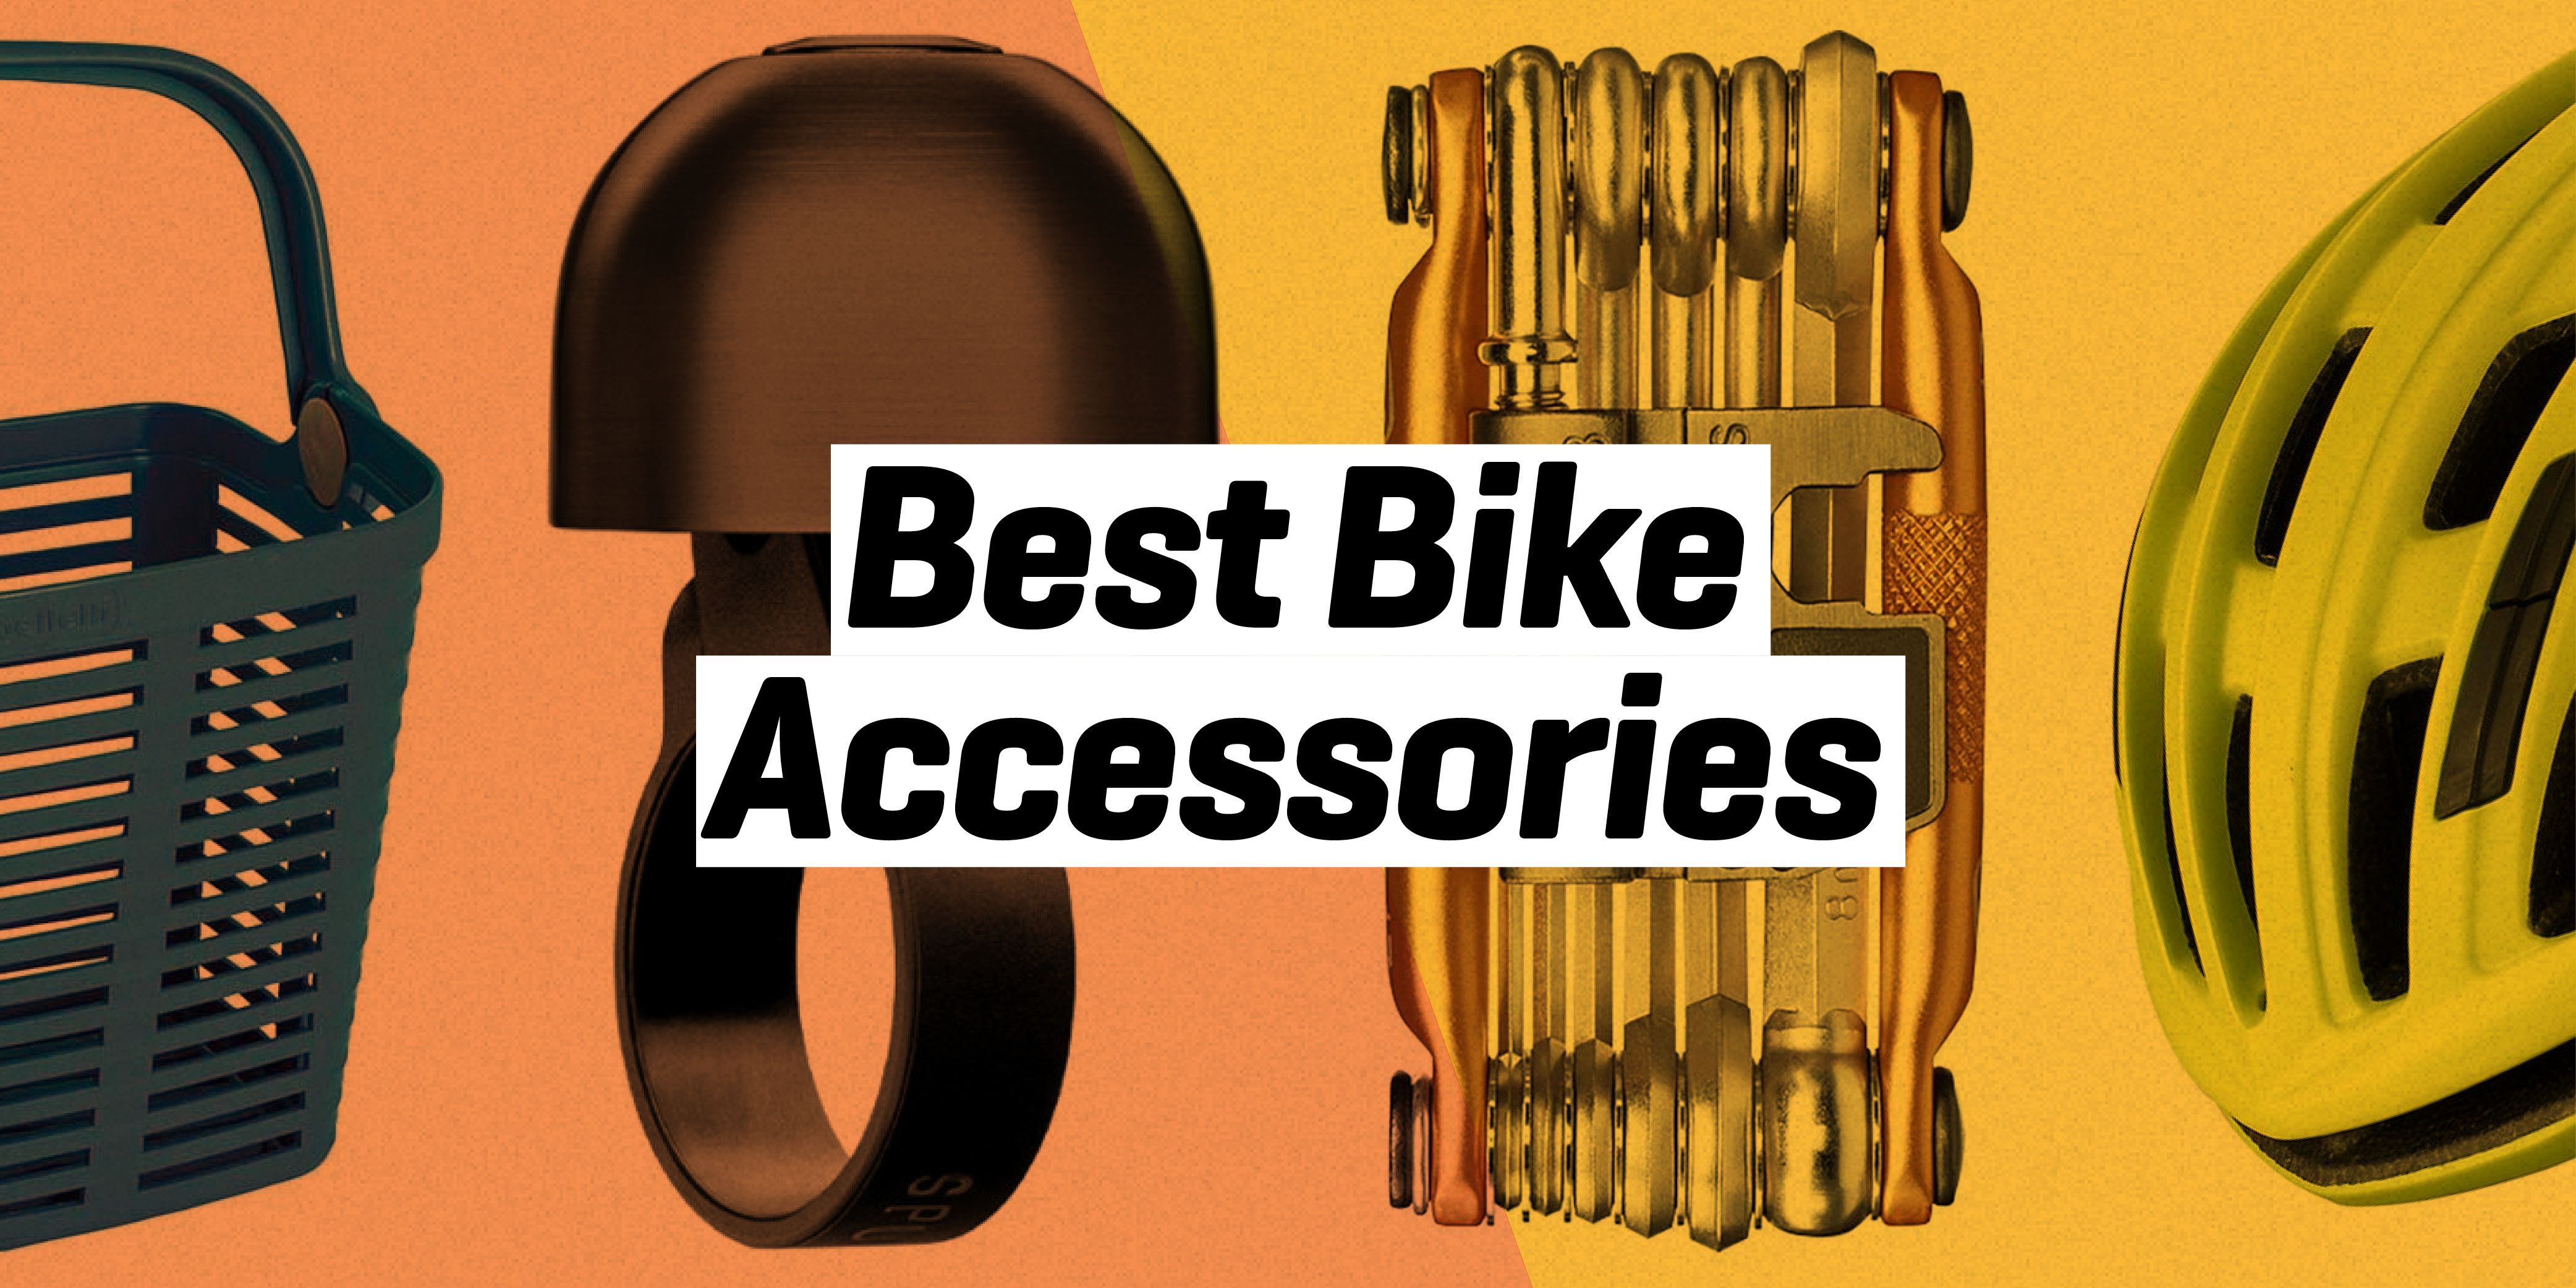 Best Accessories | Bike Accessories and Gadgets